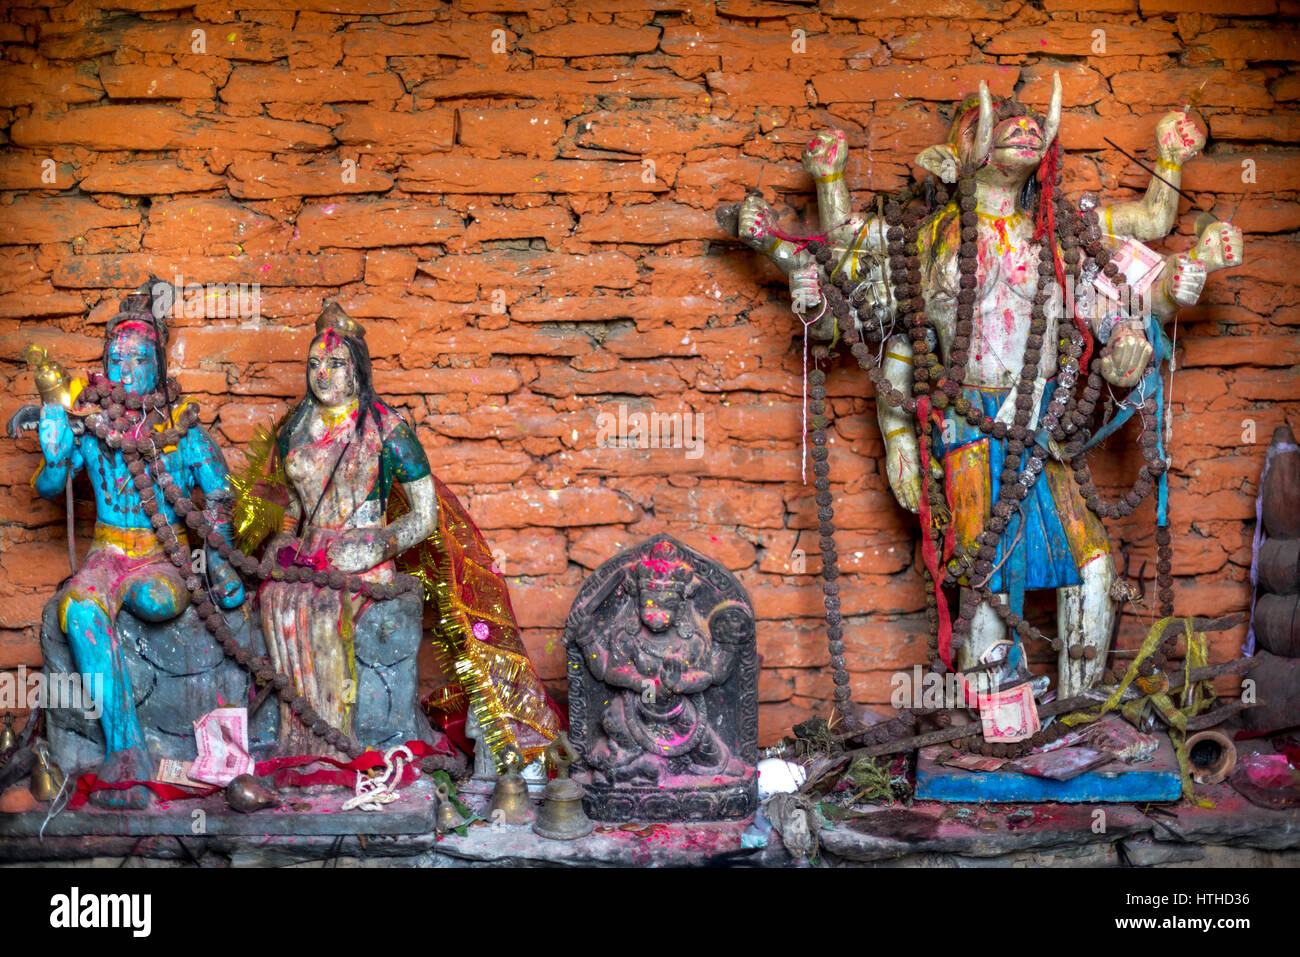 Hindu deities inside a temple on the Panchase Lakeside, Panchase Mountain, Nepal. Stock Photo